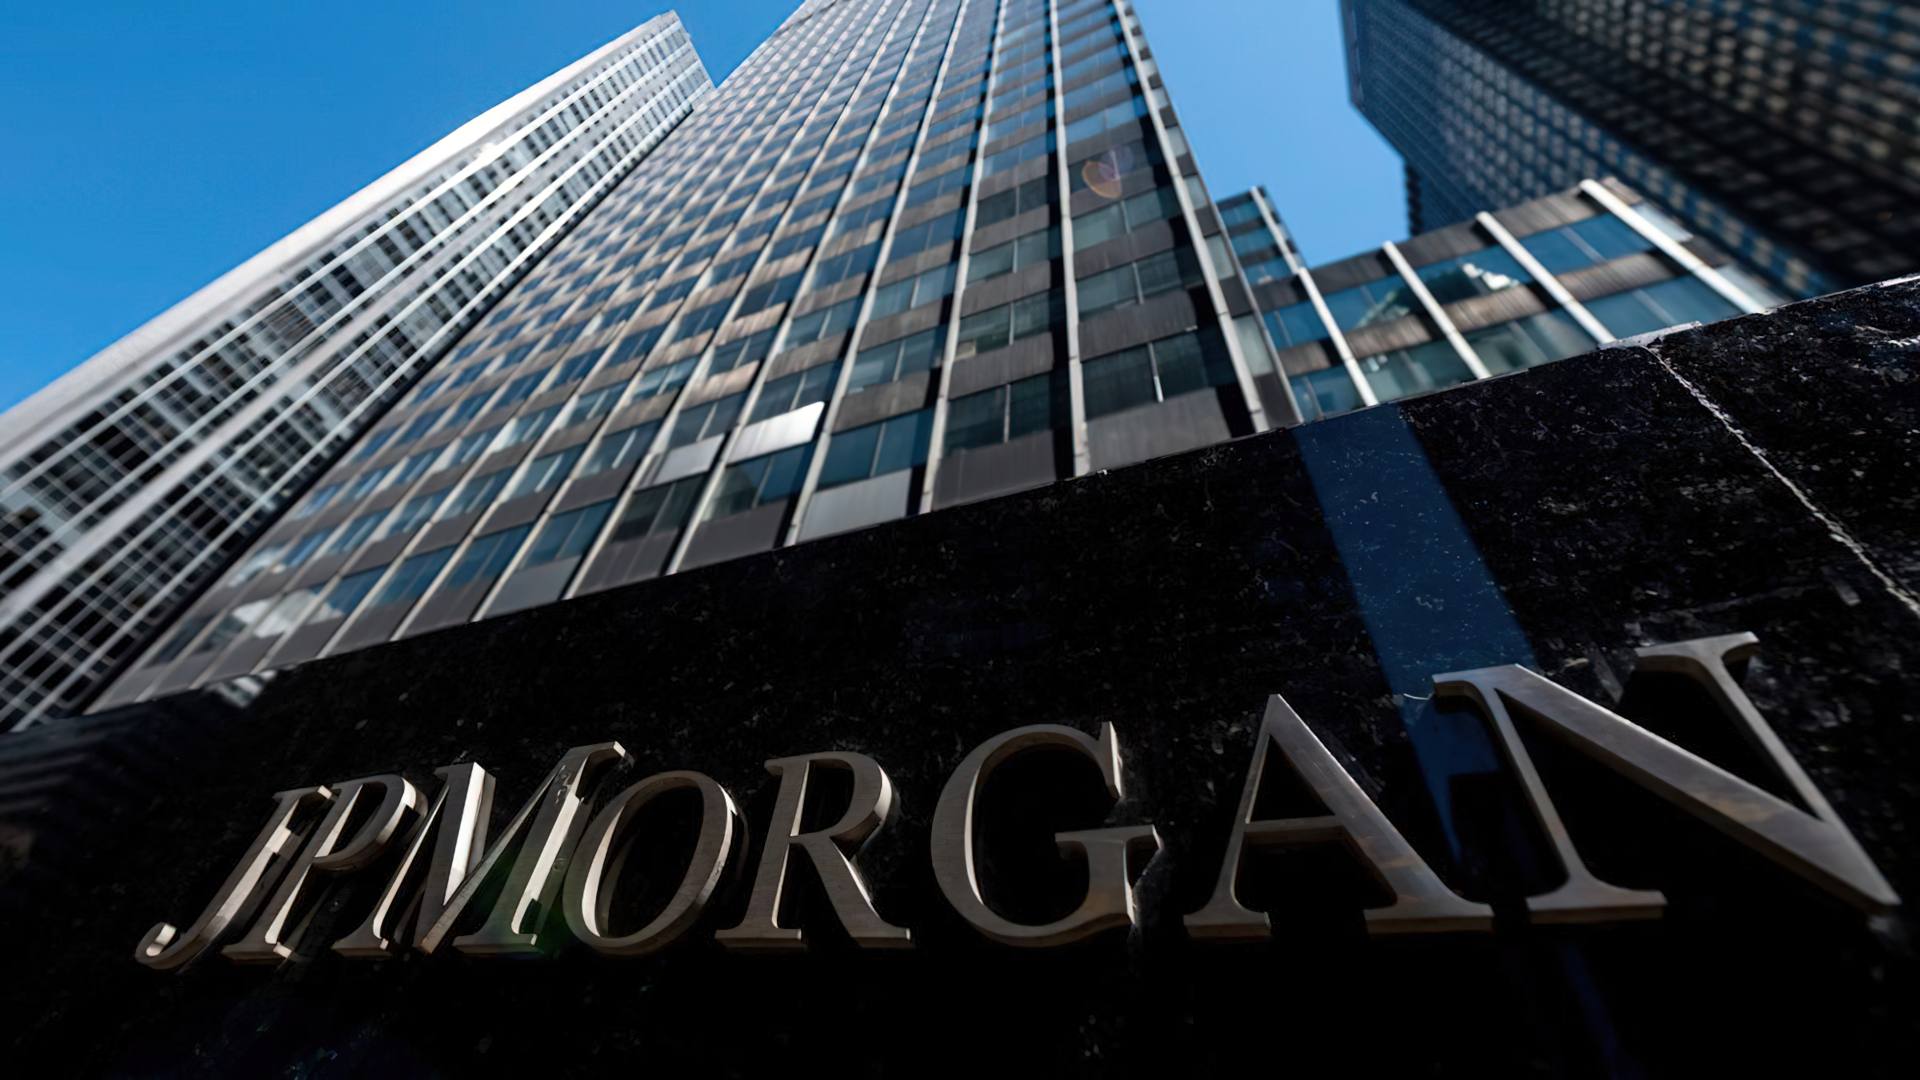 JP Morgan crypto wallet trademark approved